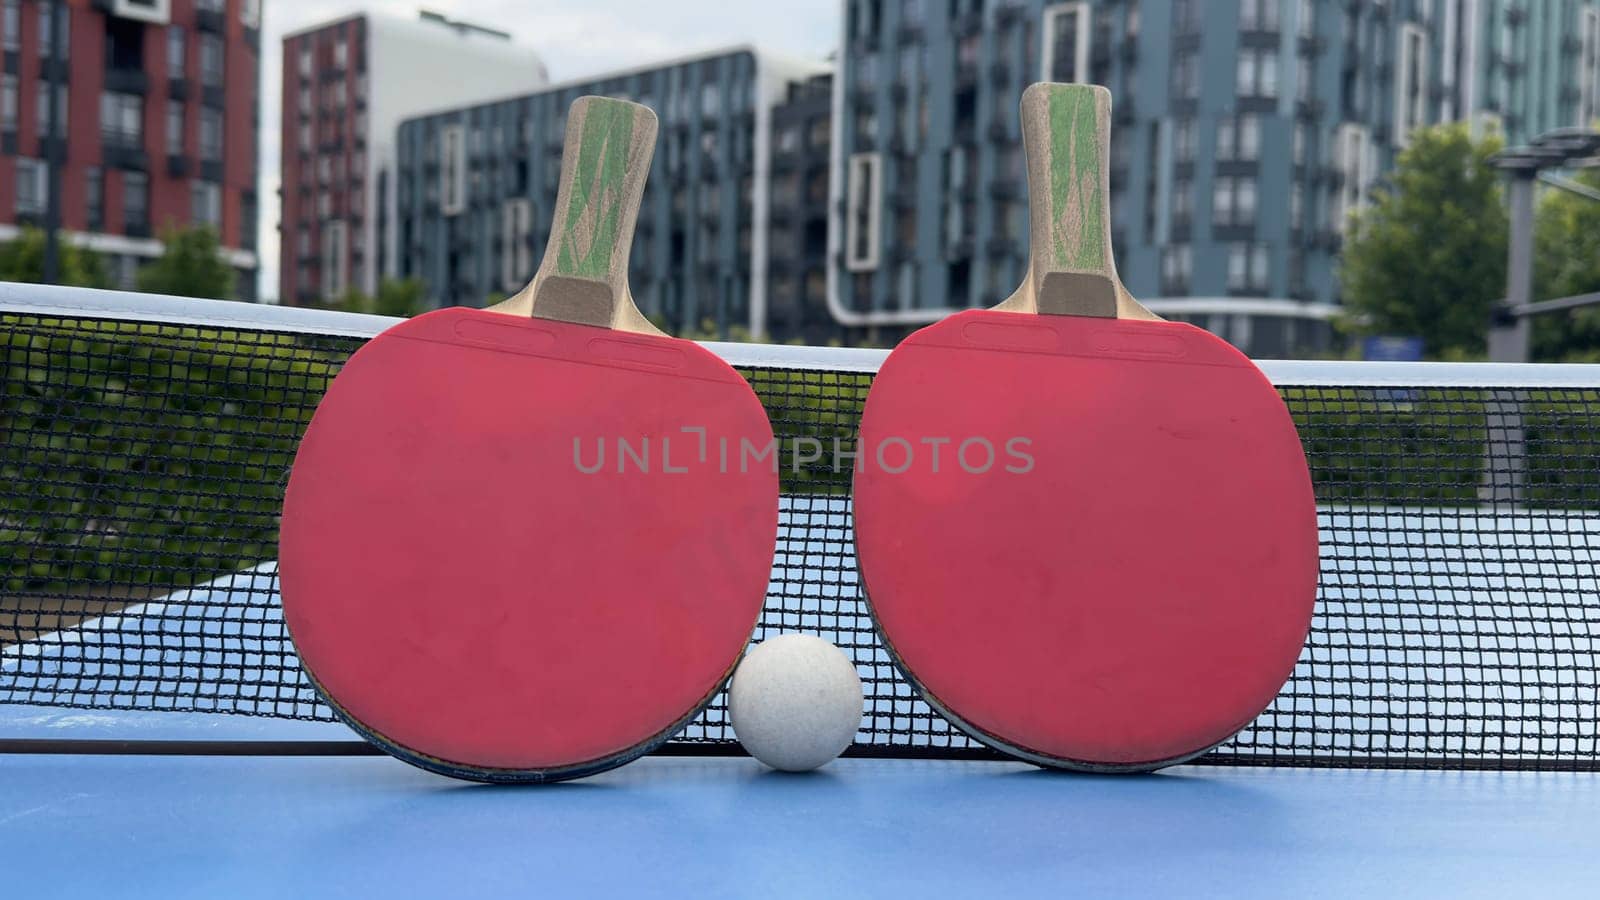 Minimal photos of table tennis . High quality photo